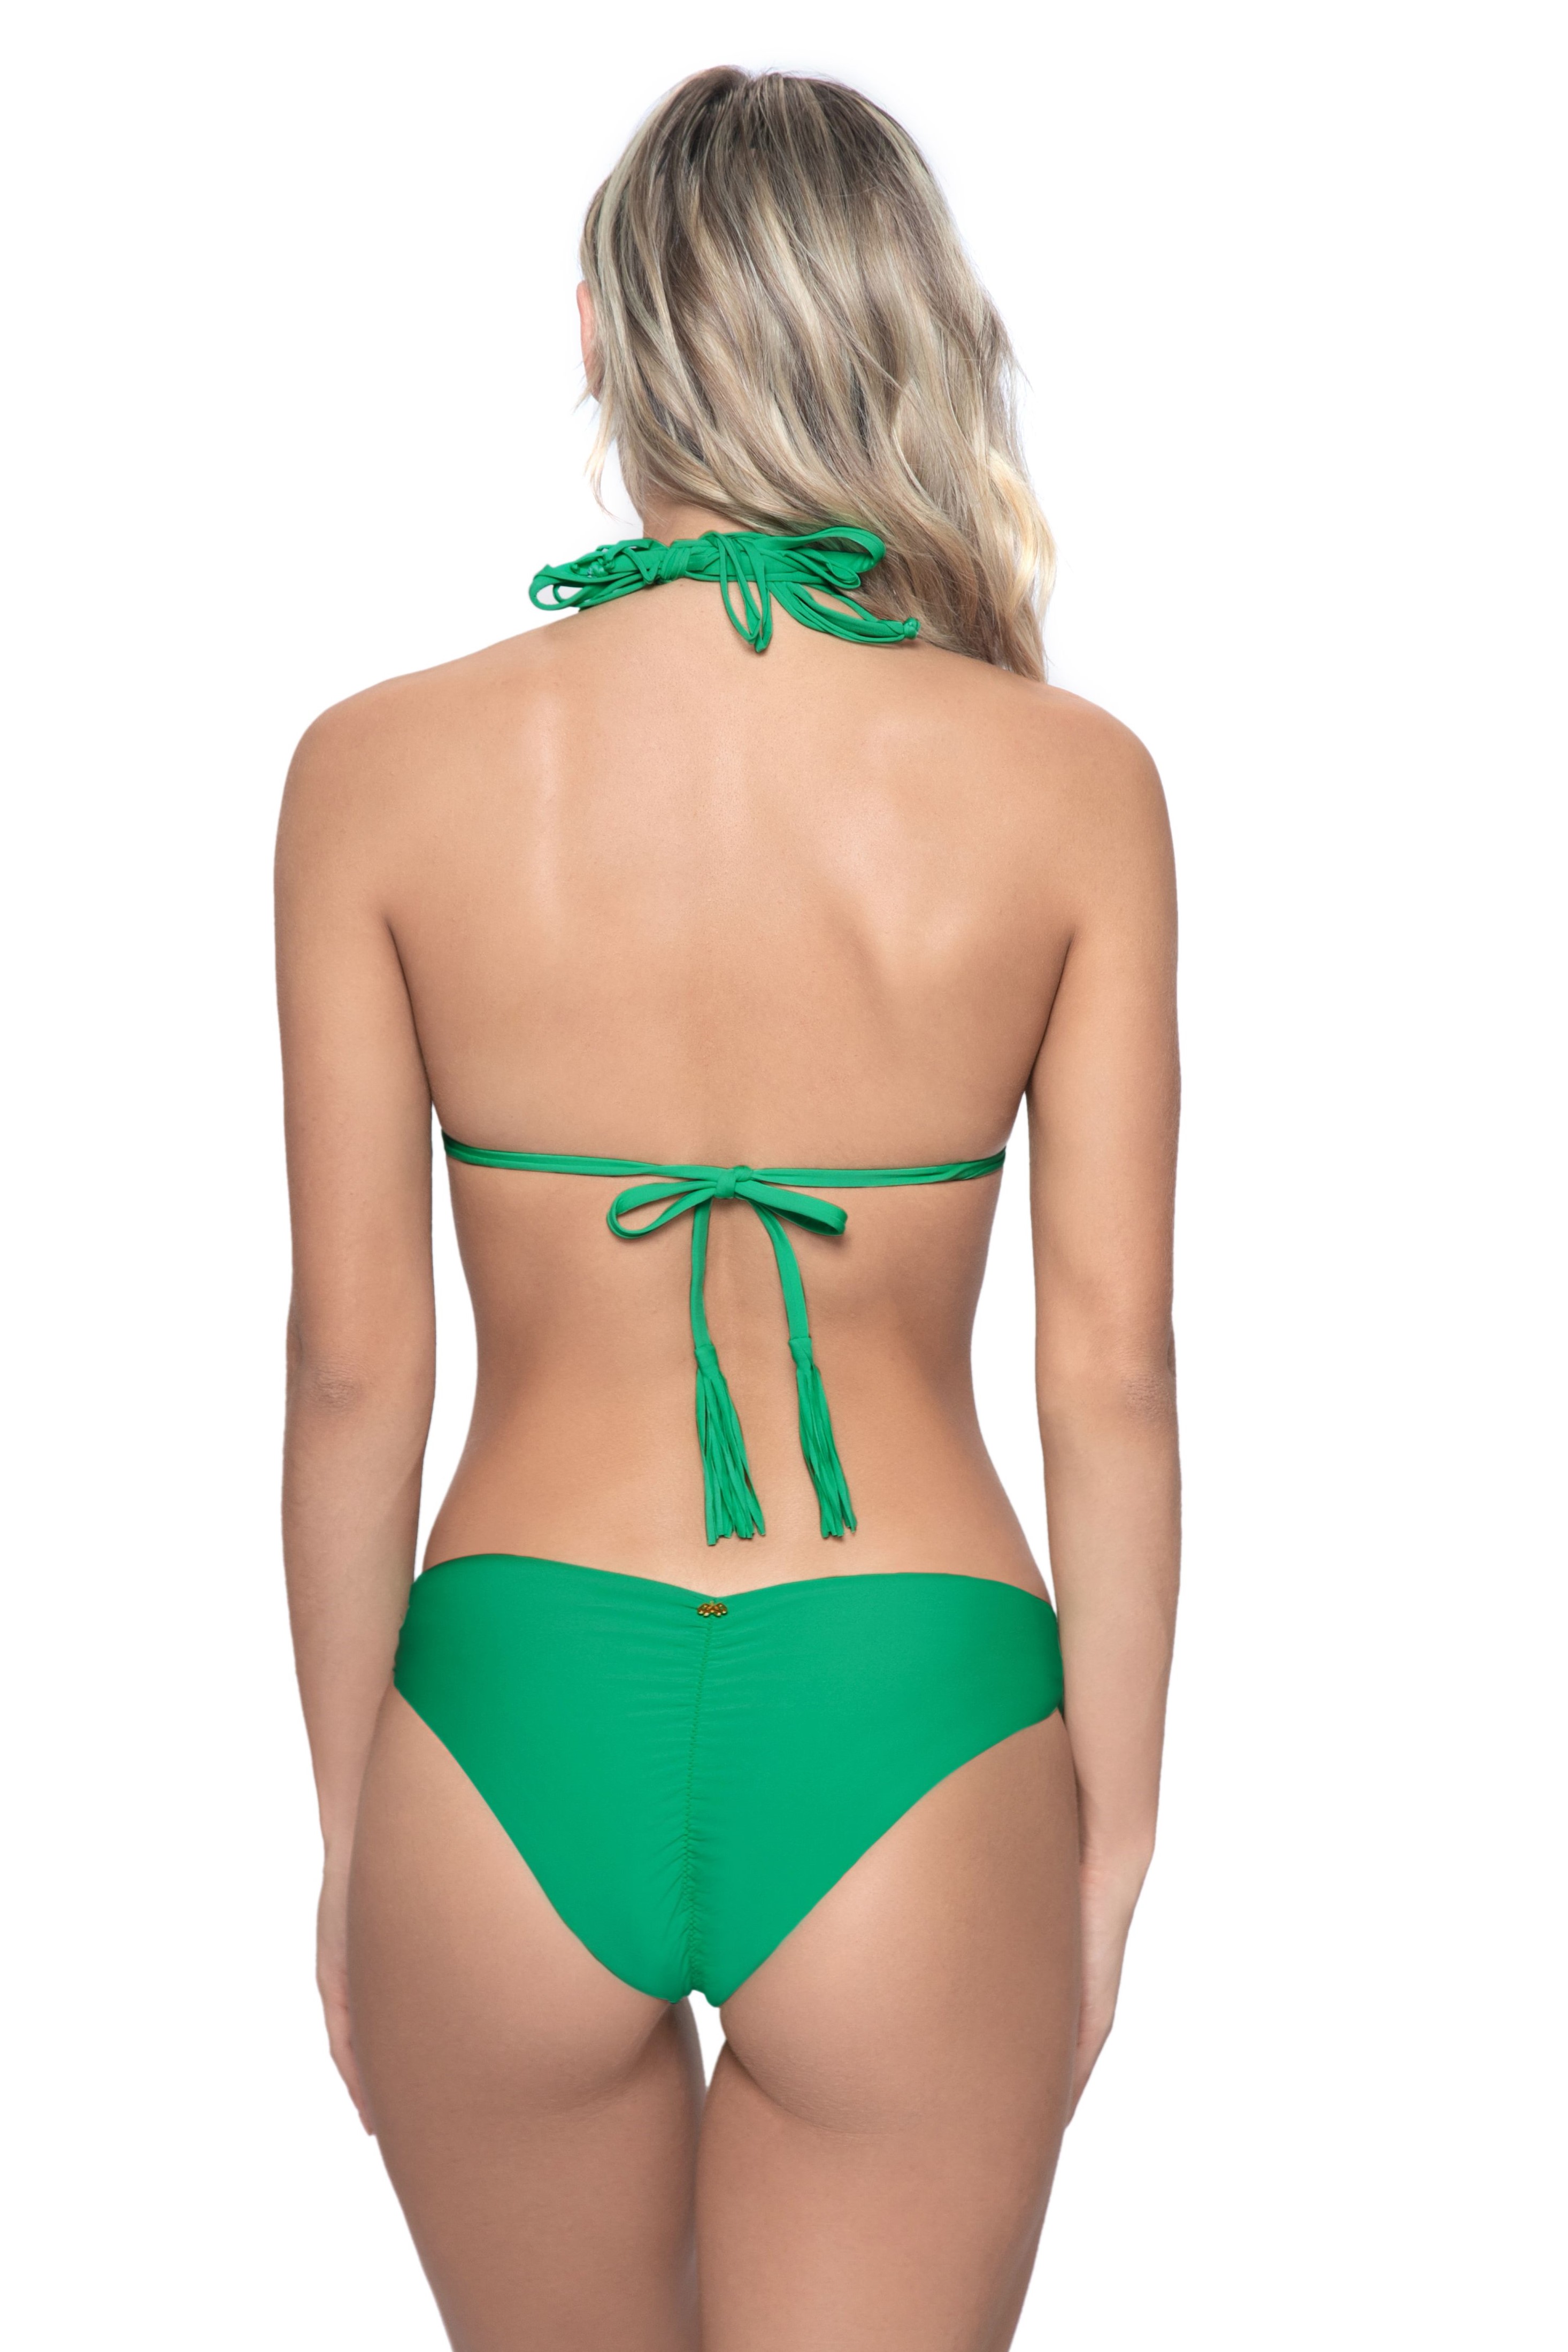 Pq Swim Isla Tri Emerald Bay Triangel Bikini Groen 